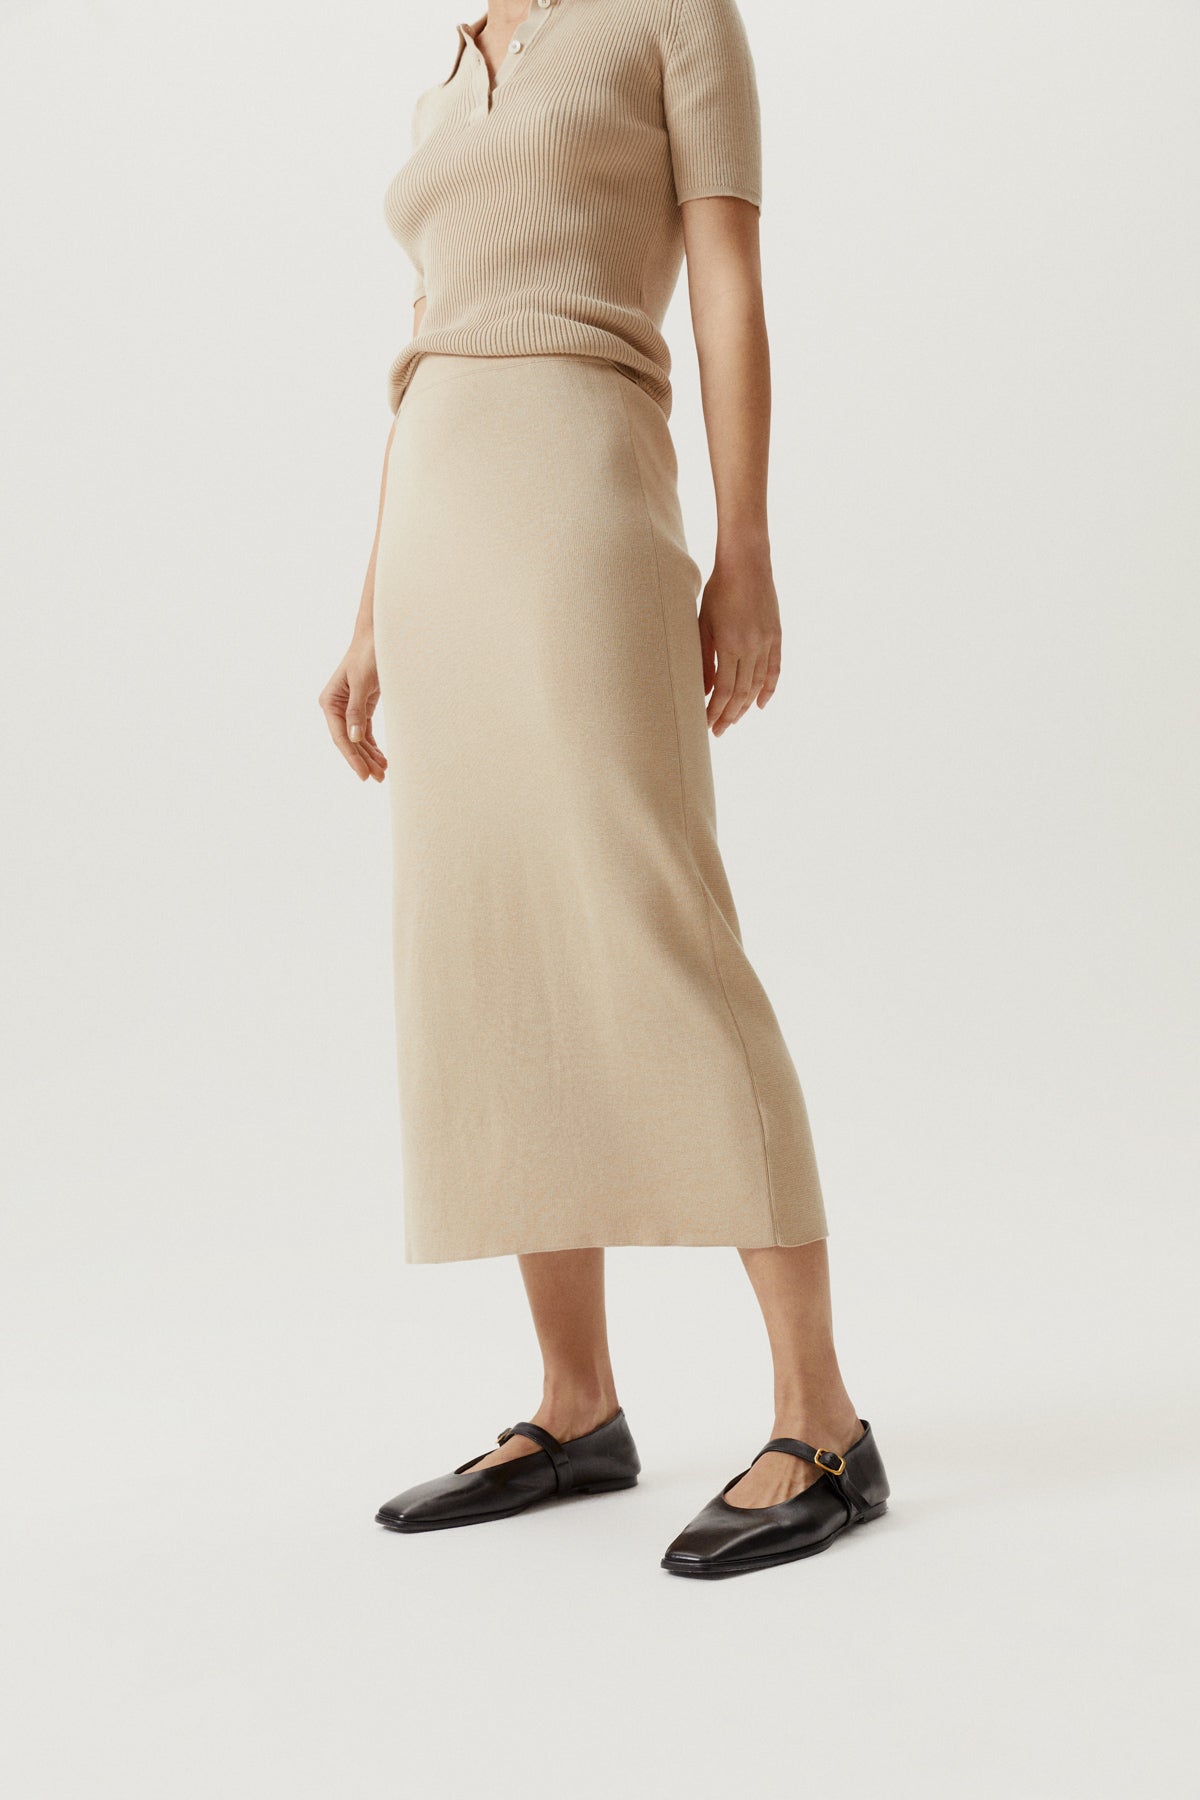 Sand | The Organic Cotton Straight Skirt